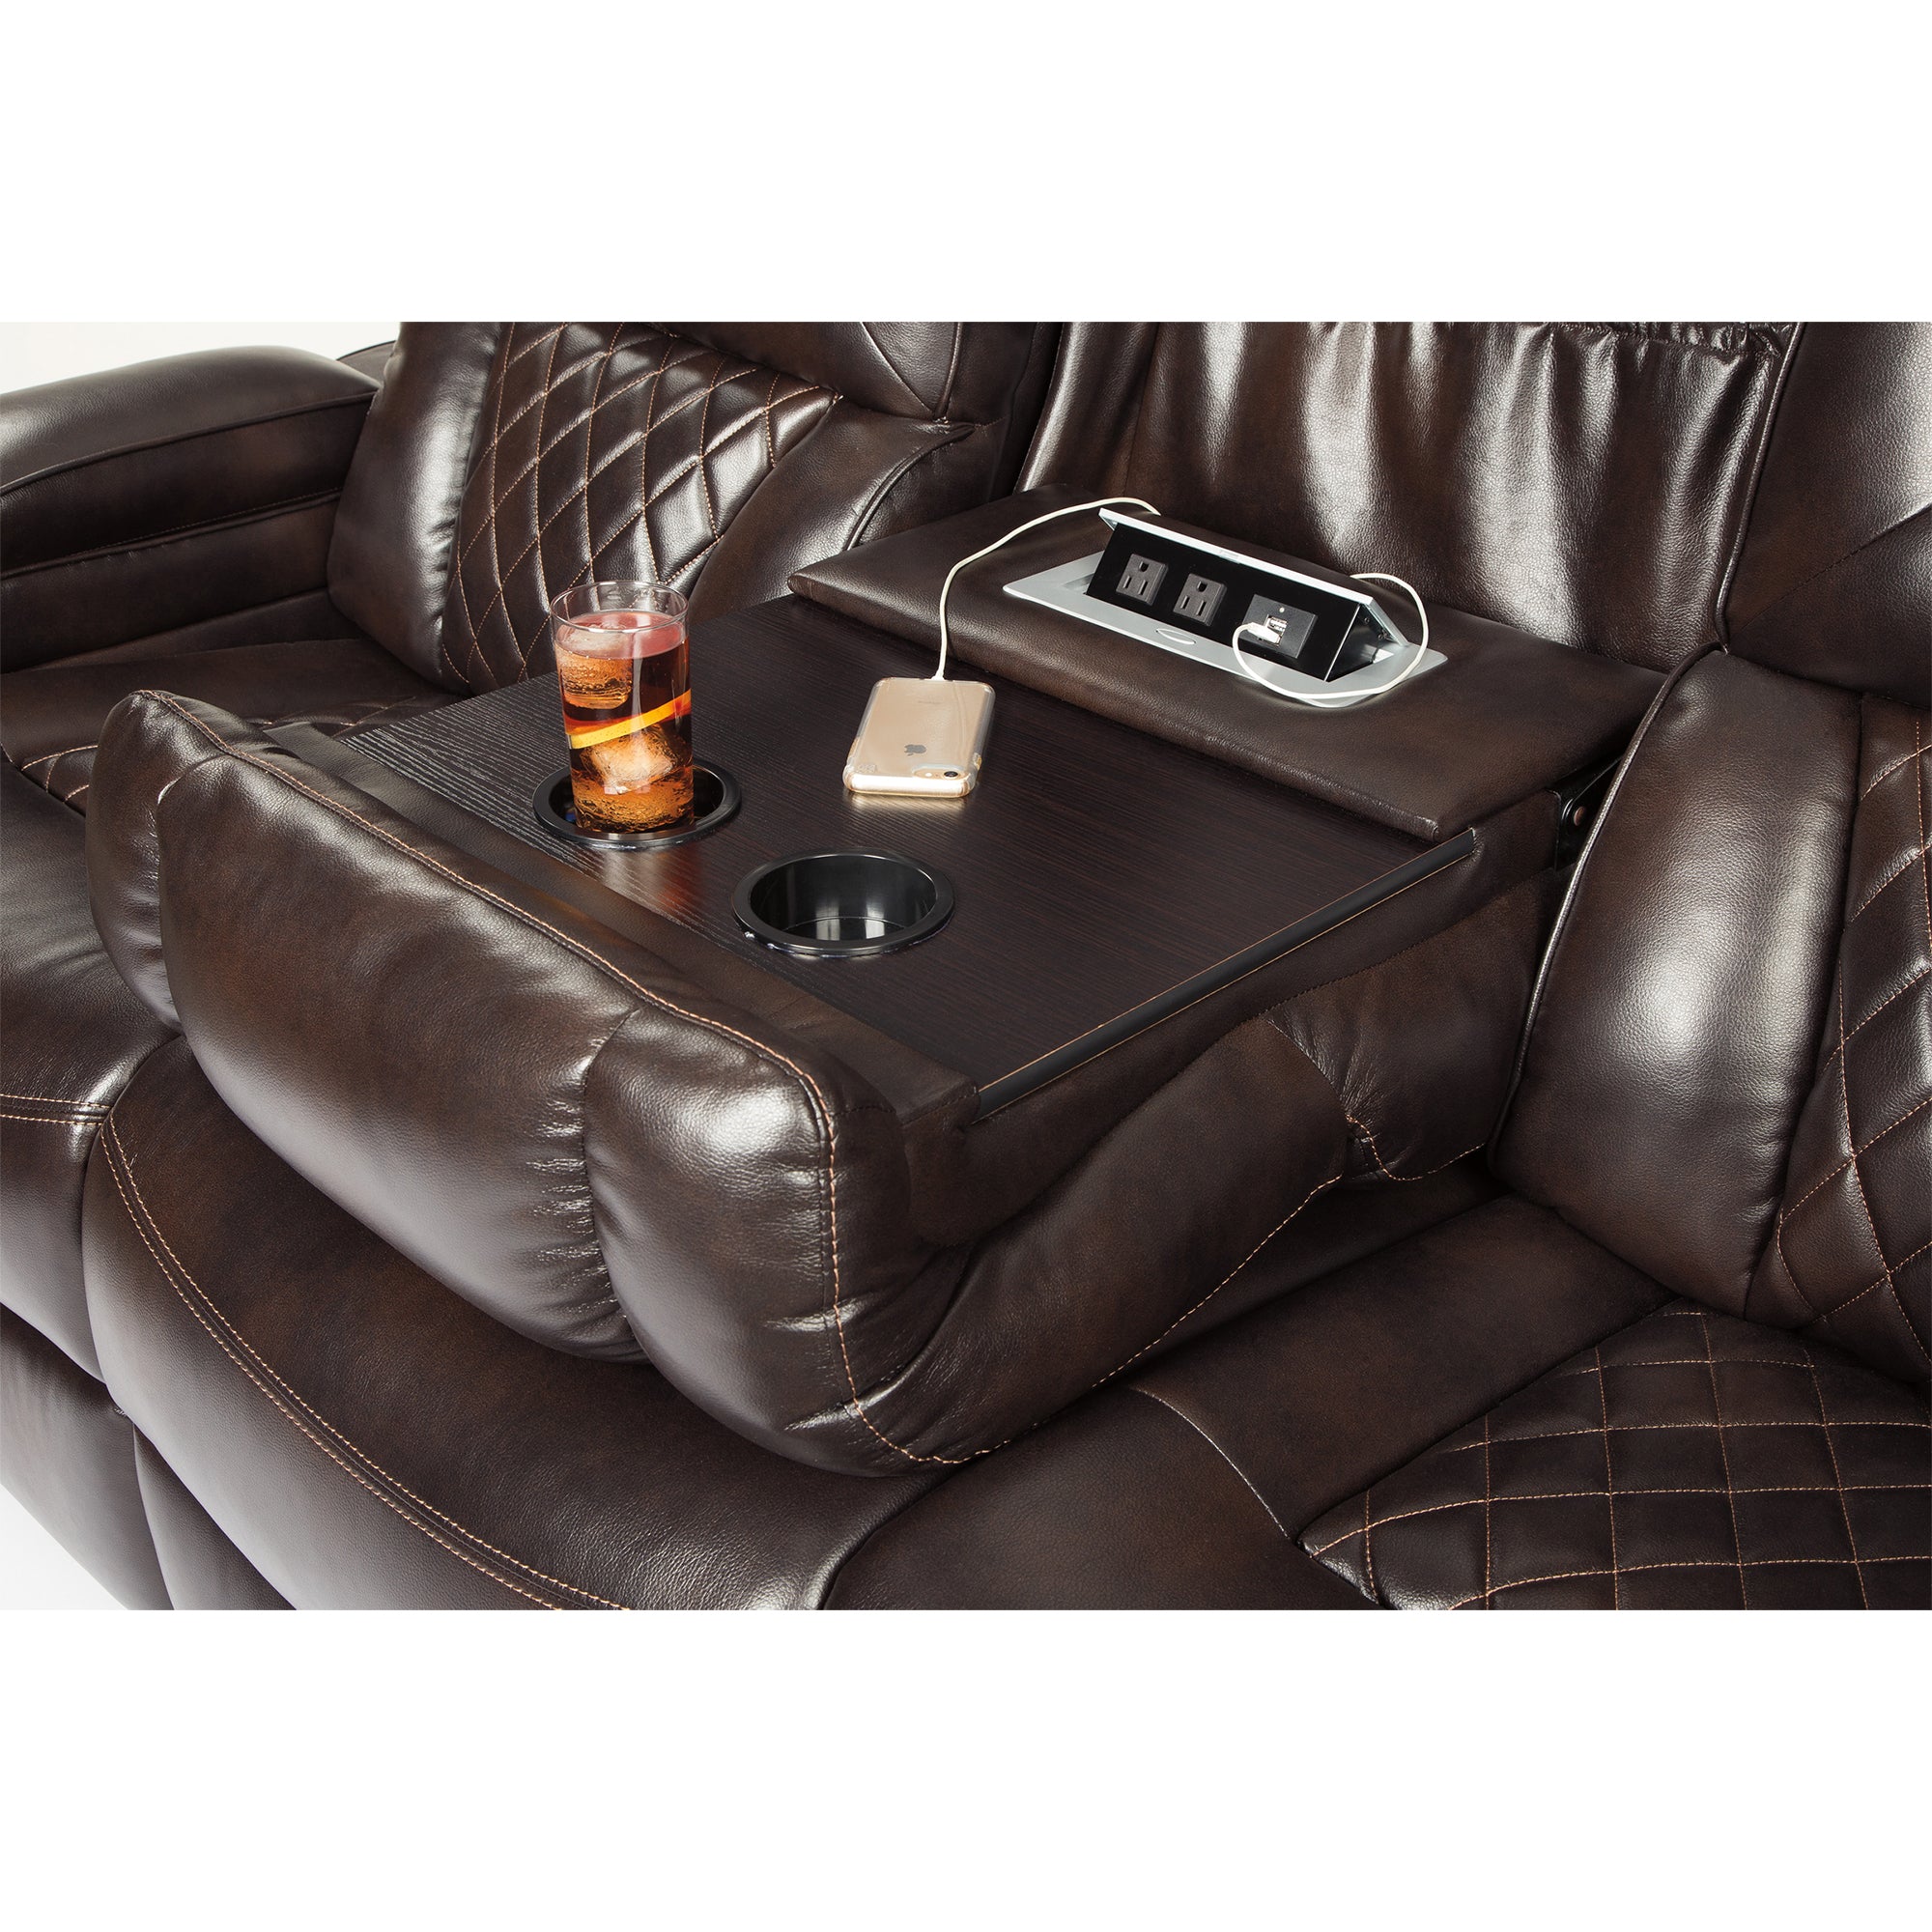 Warnerton Dual Power Reclining Sofa